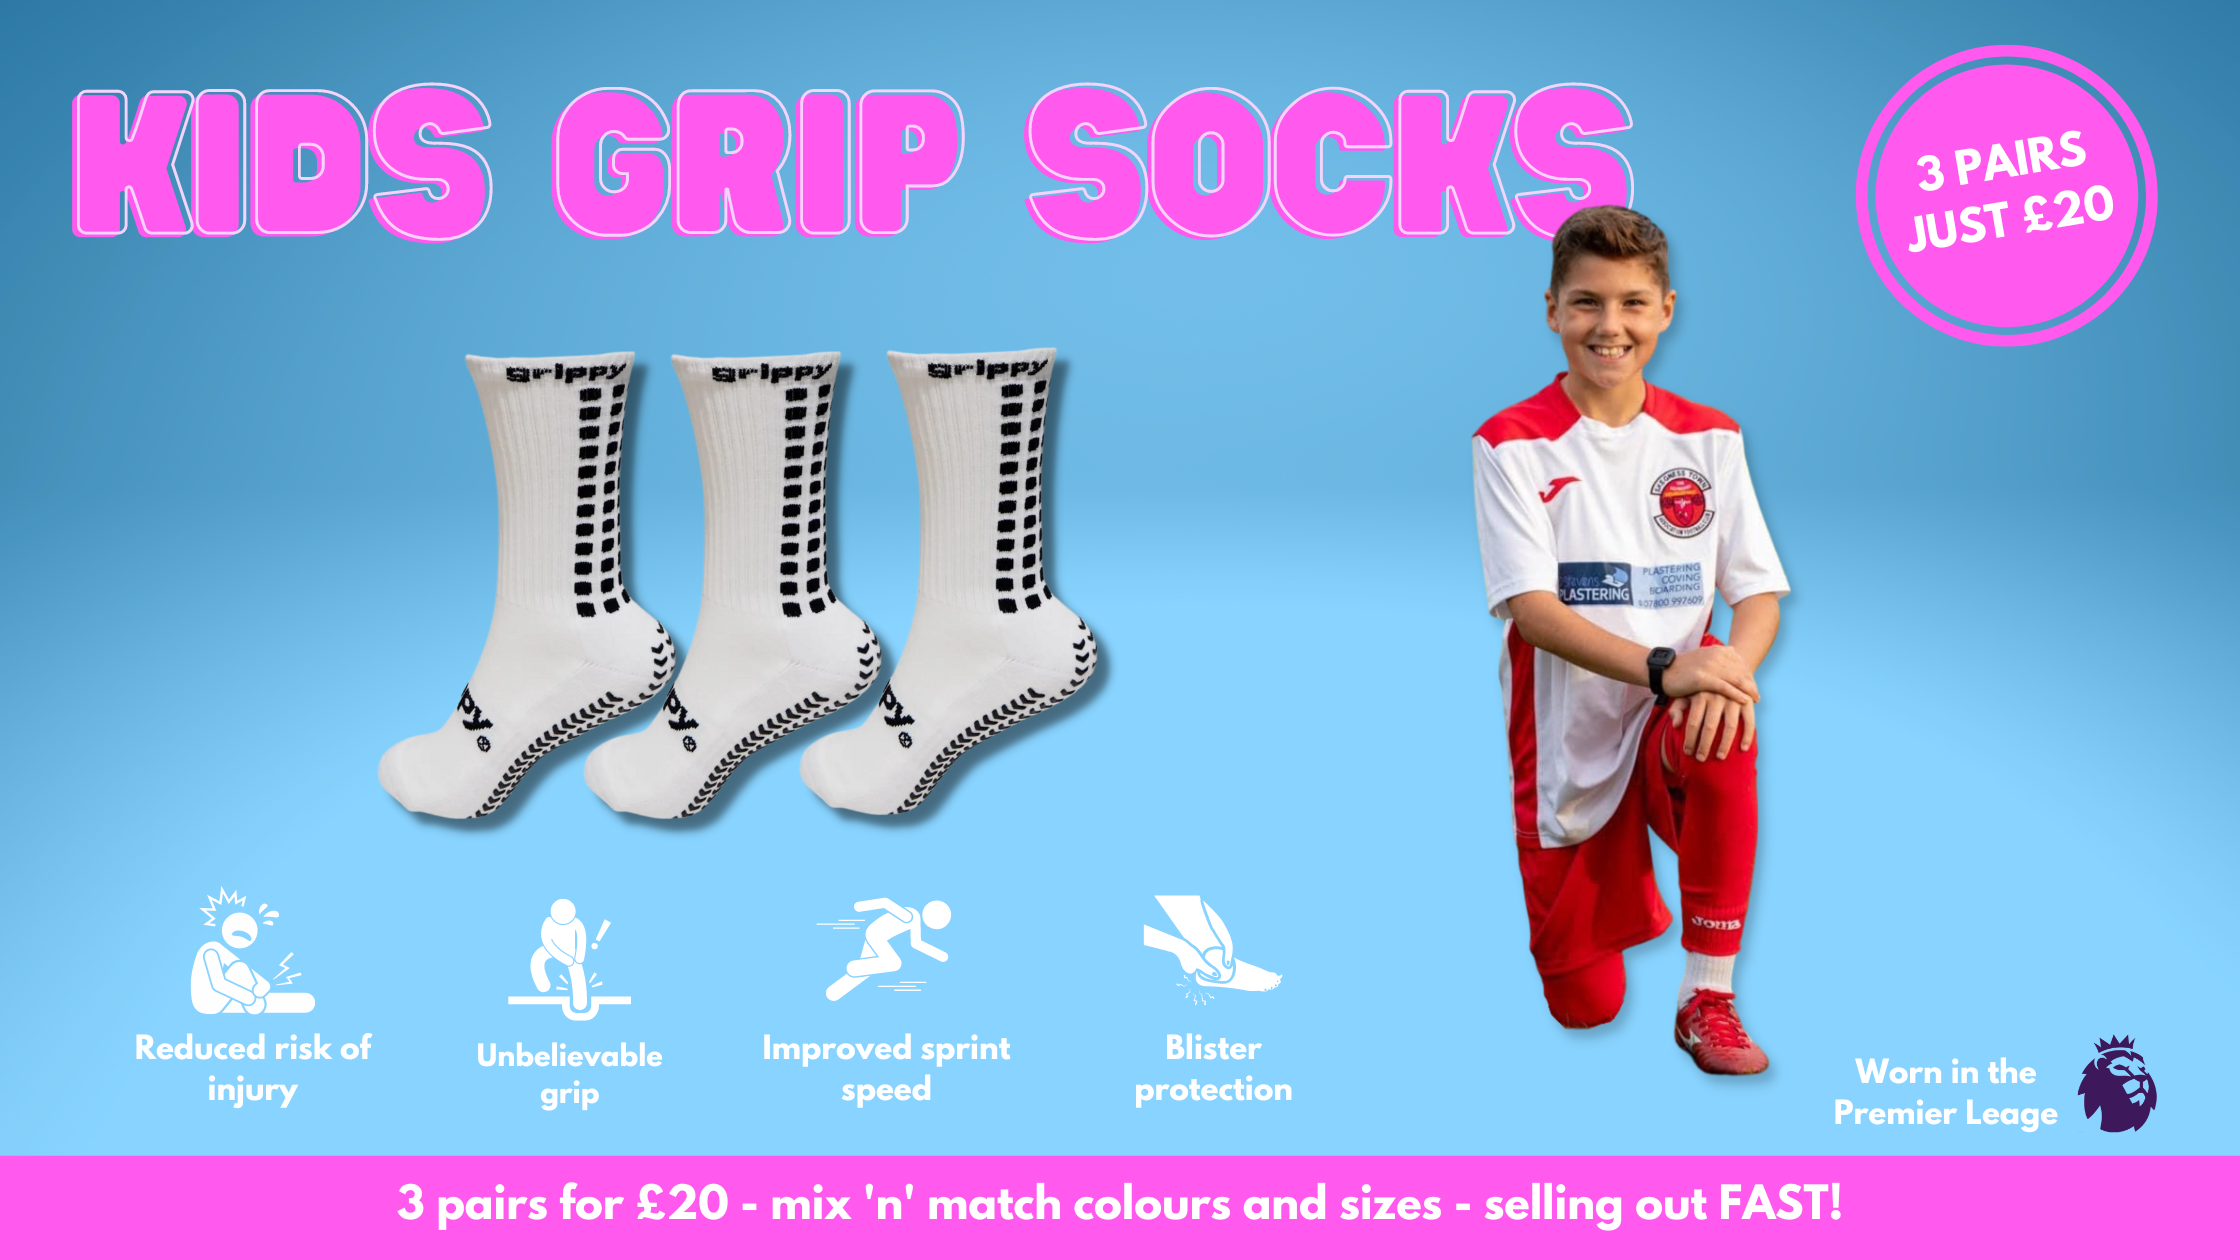 Kids grip socks